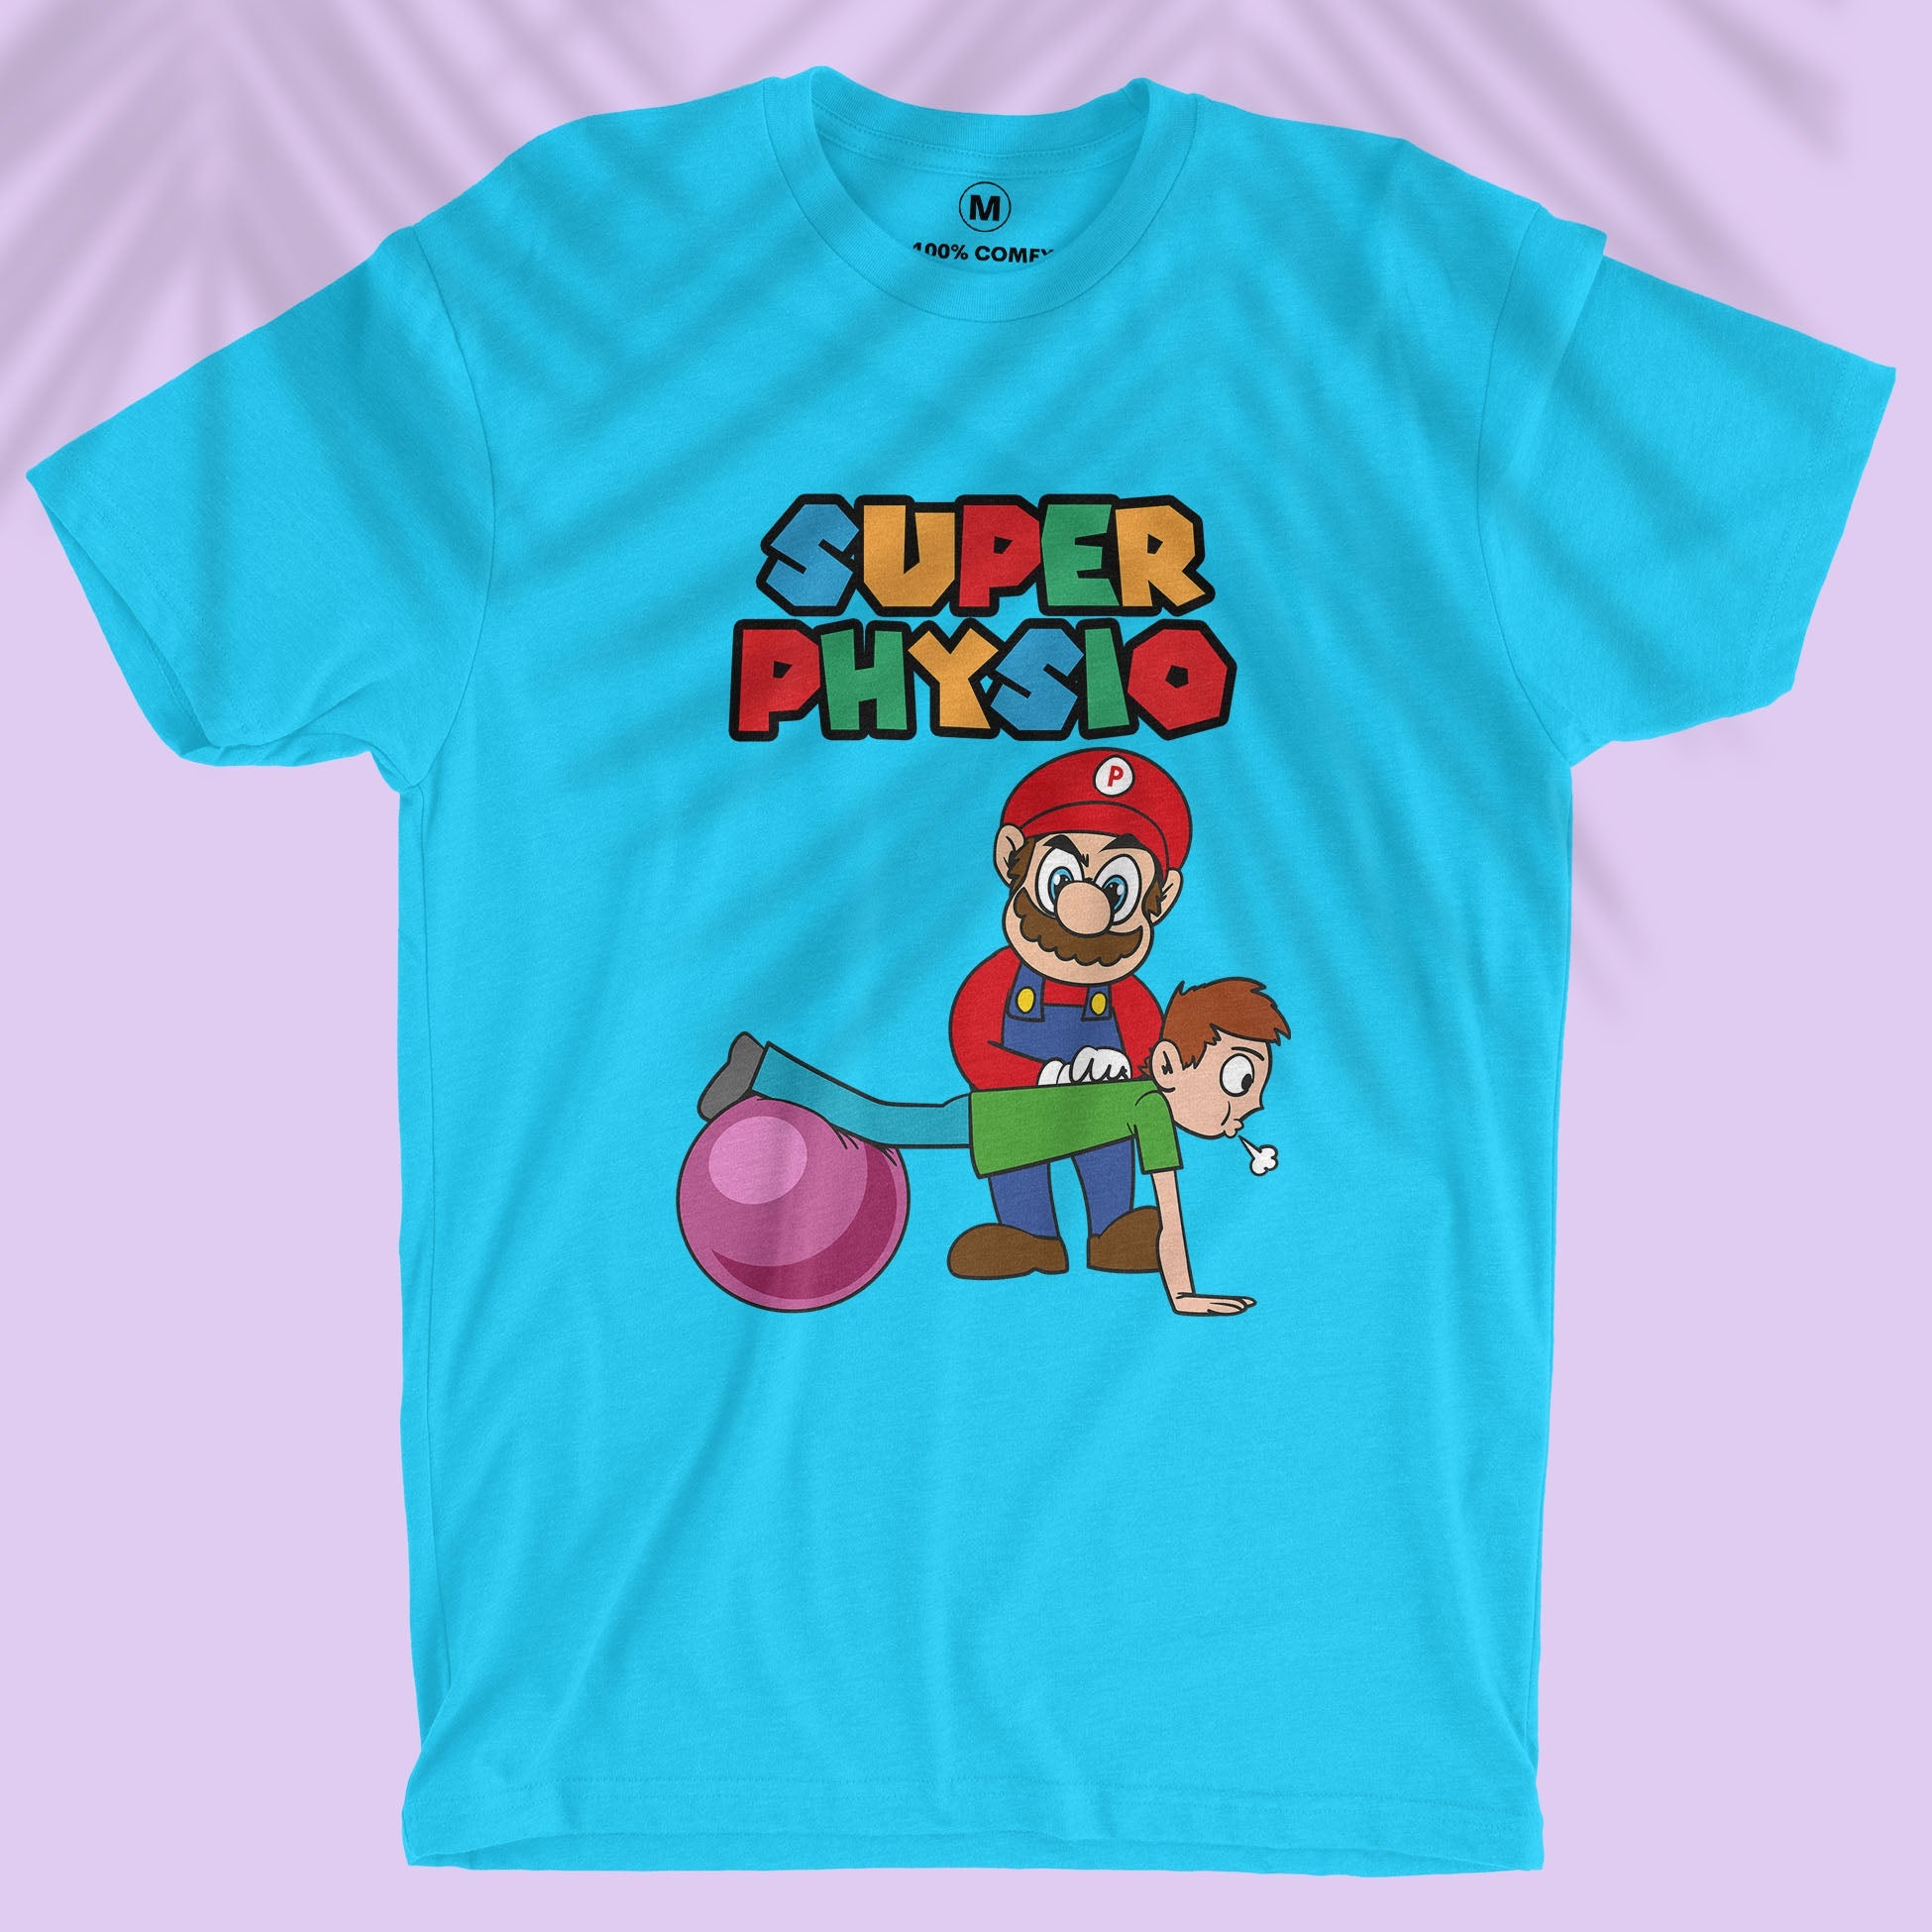 Super Physio - Men T-shirt